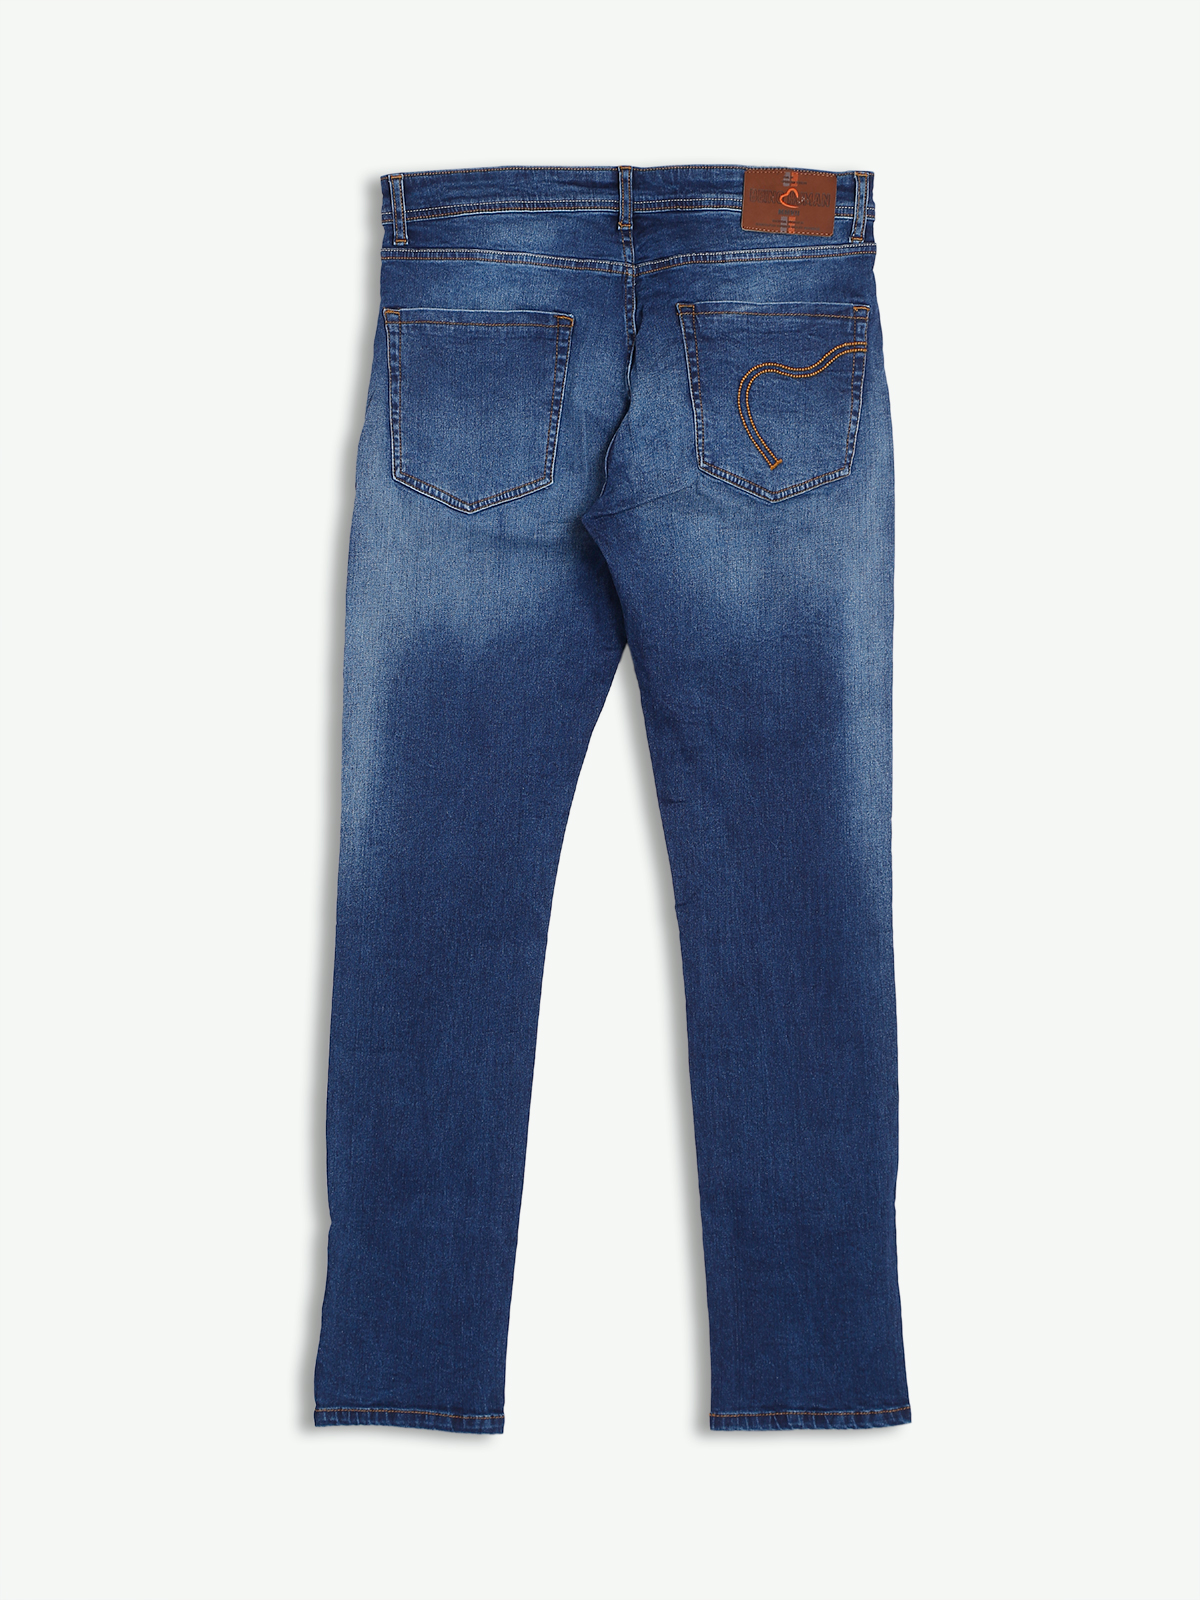 Buy Being Human Denim Blue Slim Fit Jeans for Mens Online @ Tata CLiQ